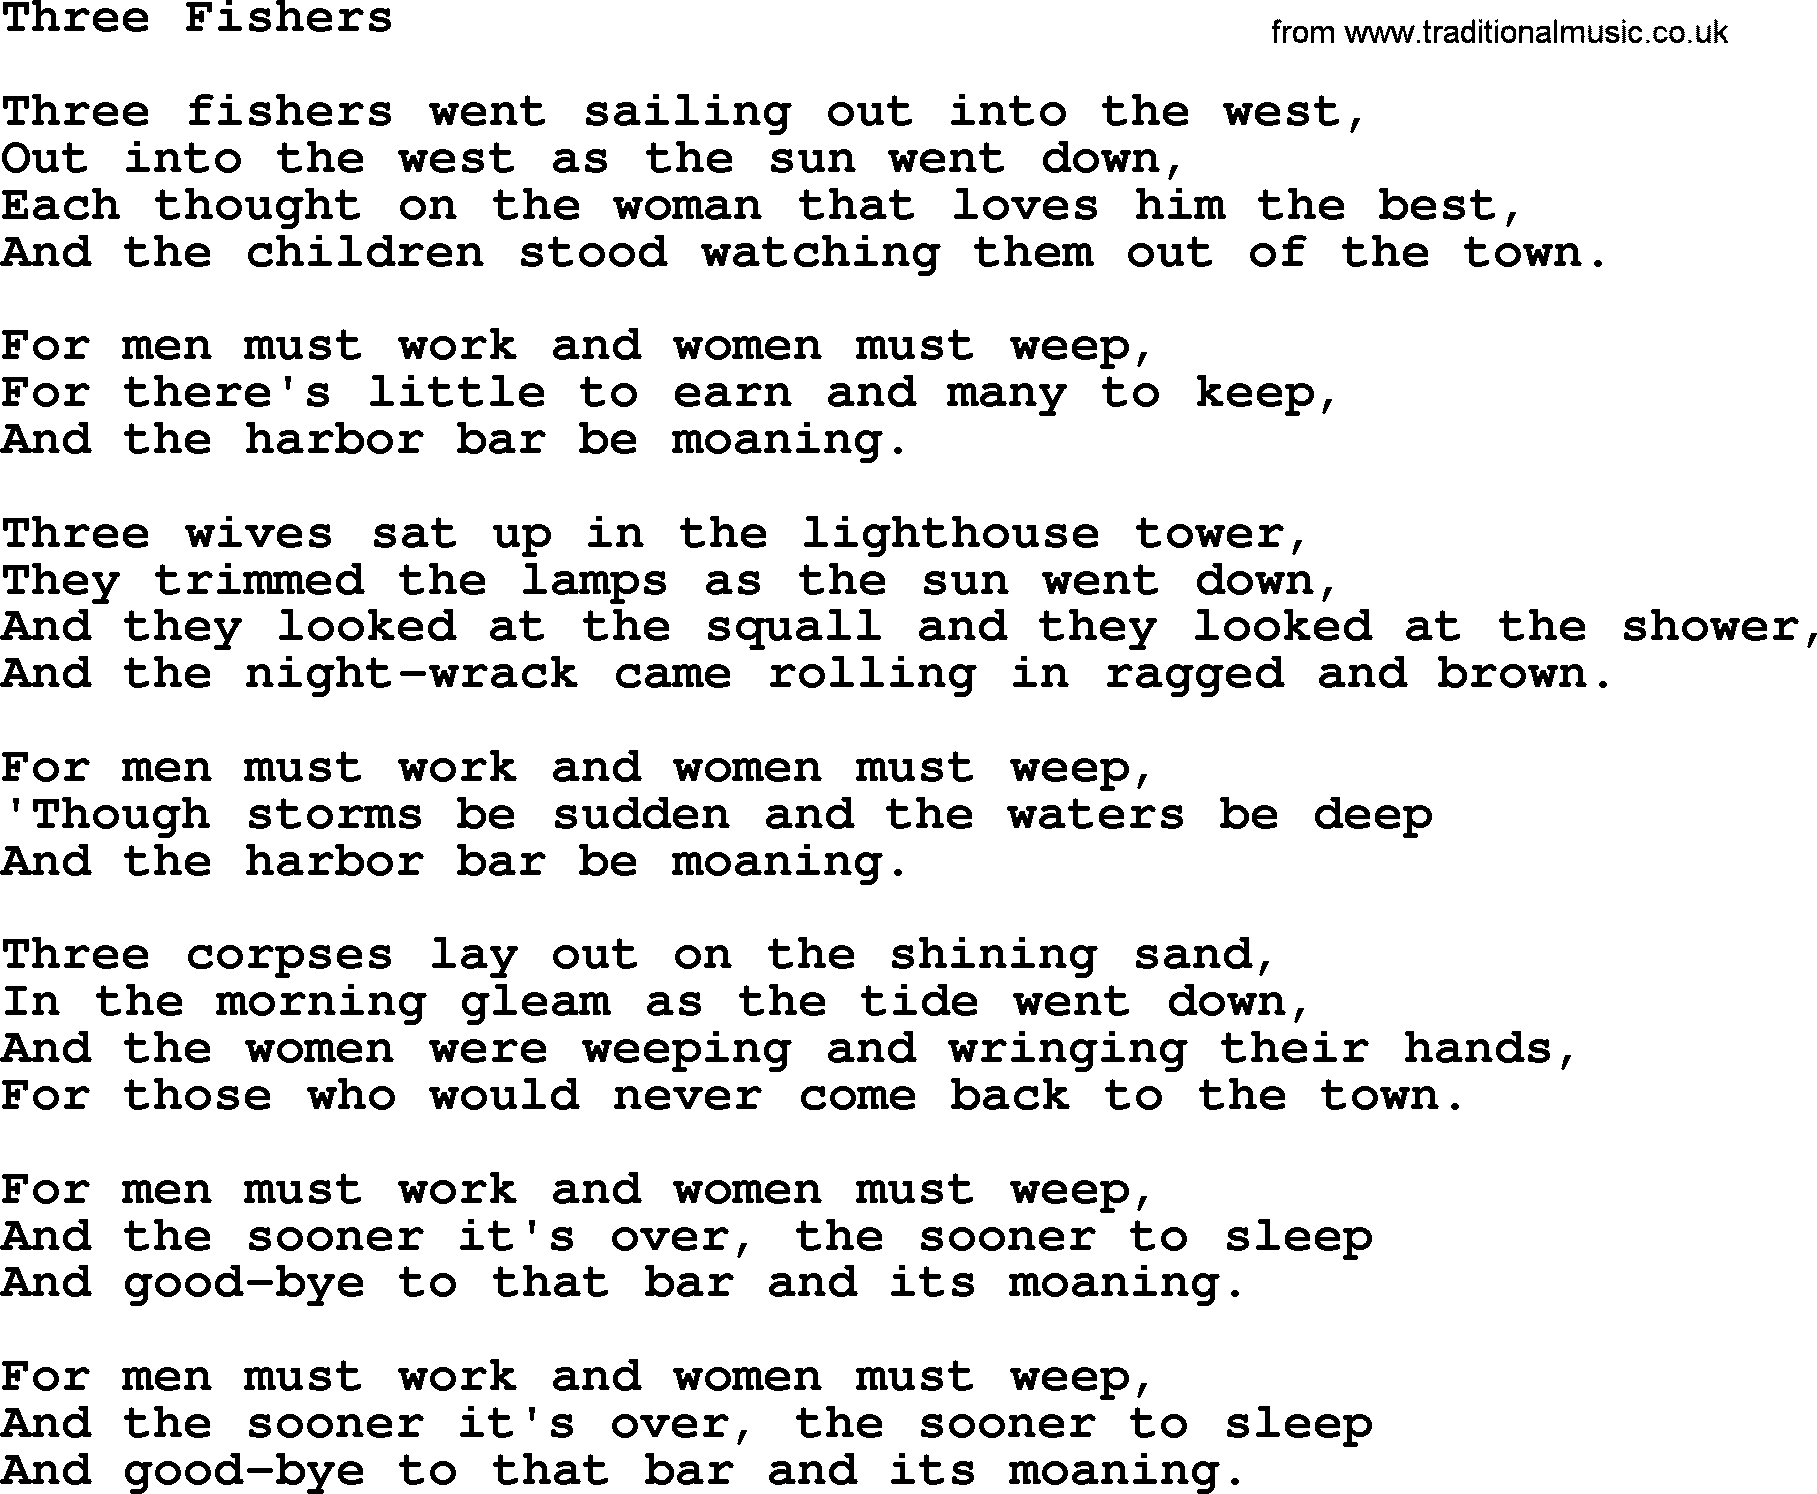 Joan Baez song Three Fishers, lyrics